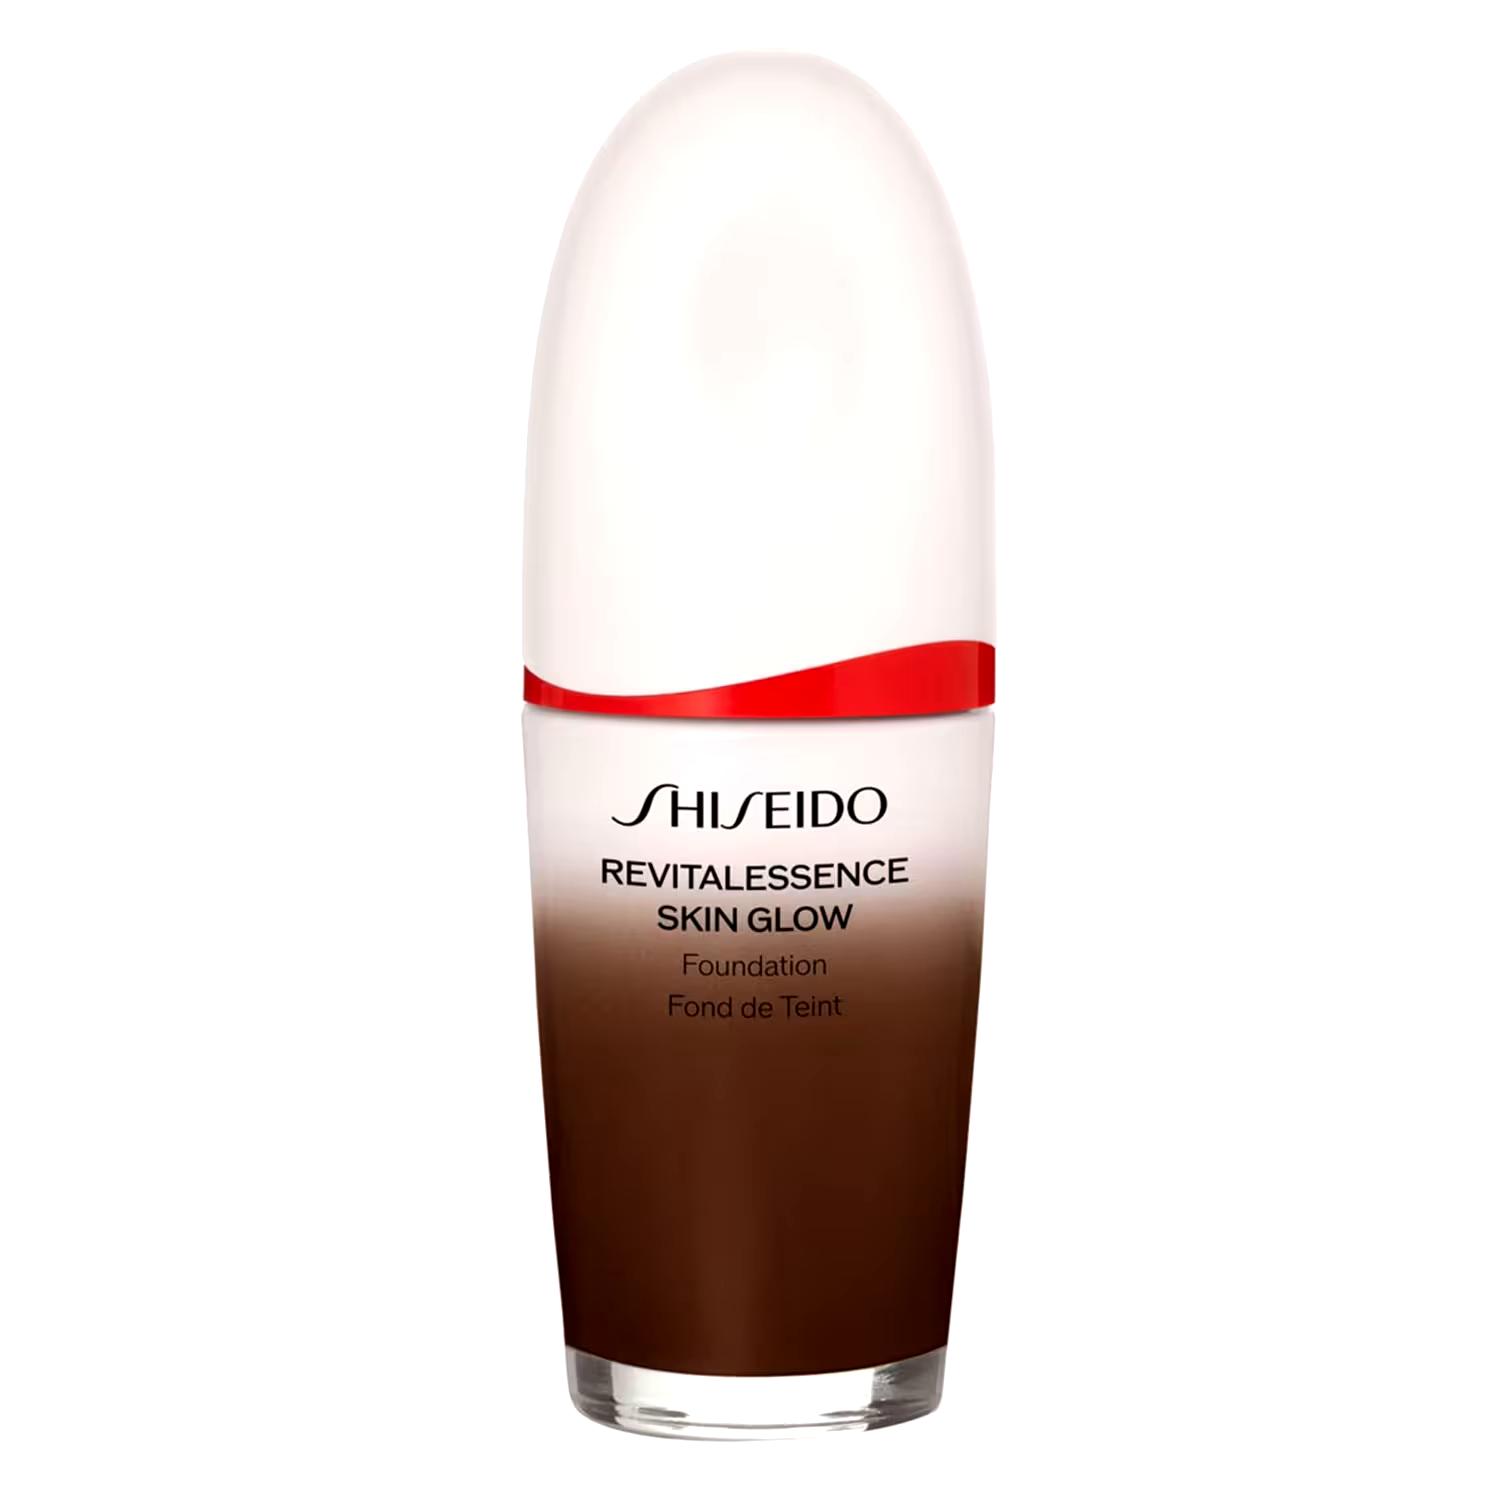 Shiseido Revitalessence Skin Glow Foundation, 30 ml